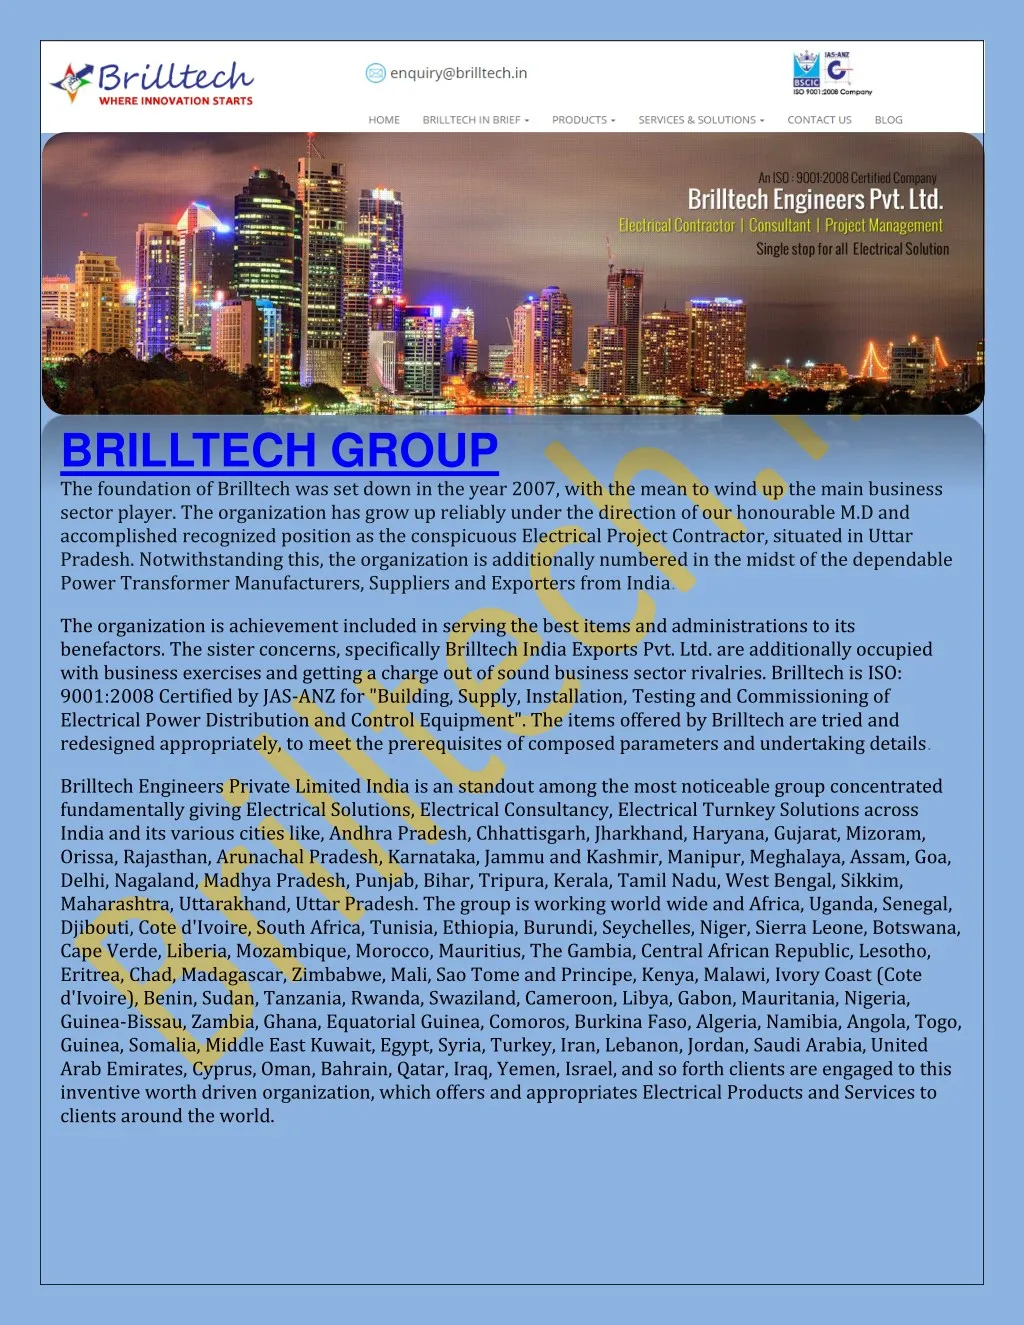 brilltech group the foundation of brilltech